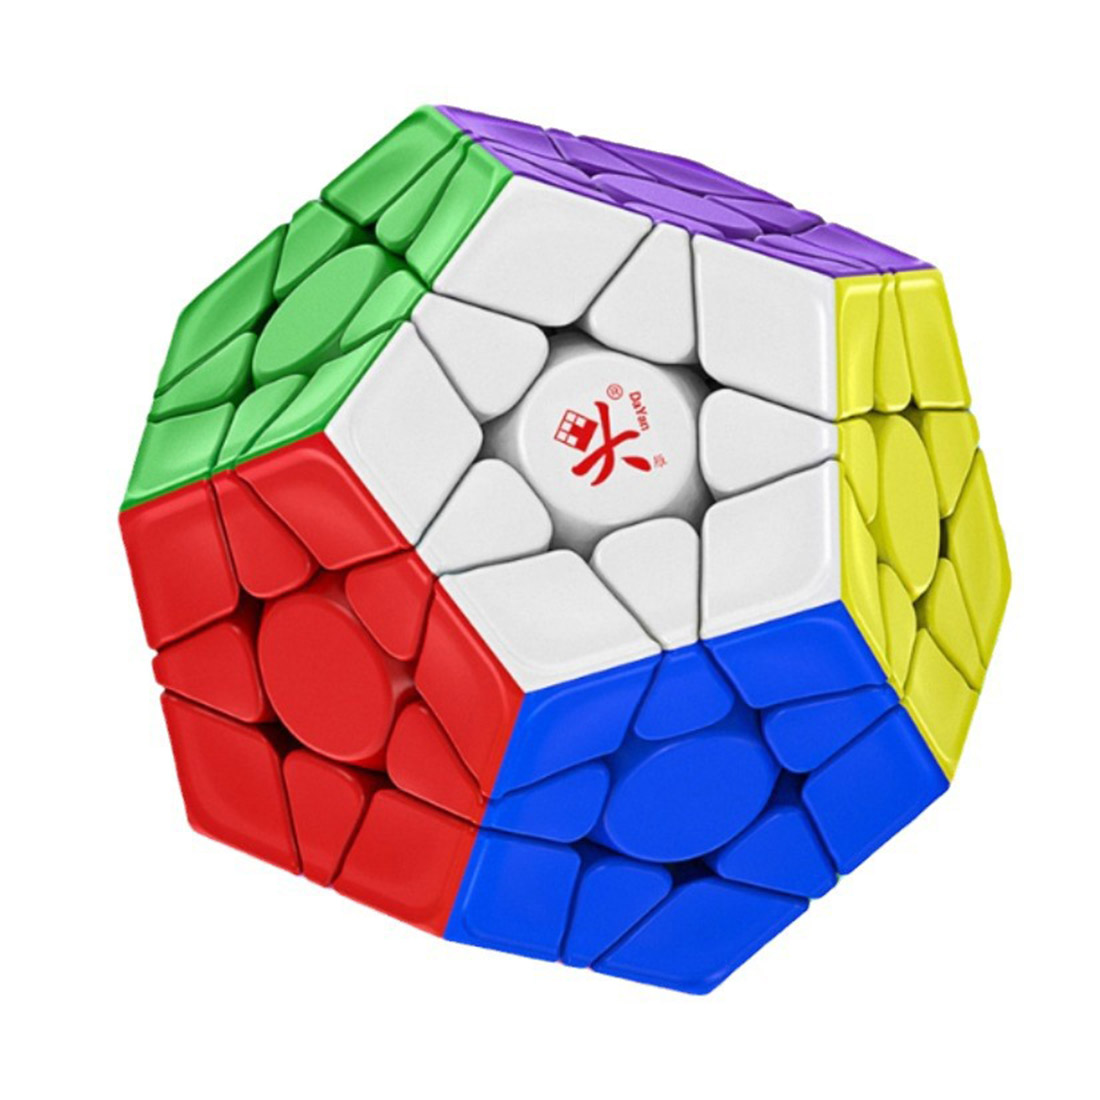 DaYan Megaminx PRO M Magnetic Irregular Magic Cube (Colorful)